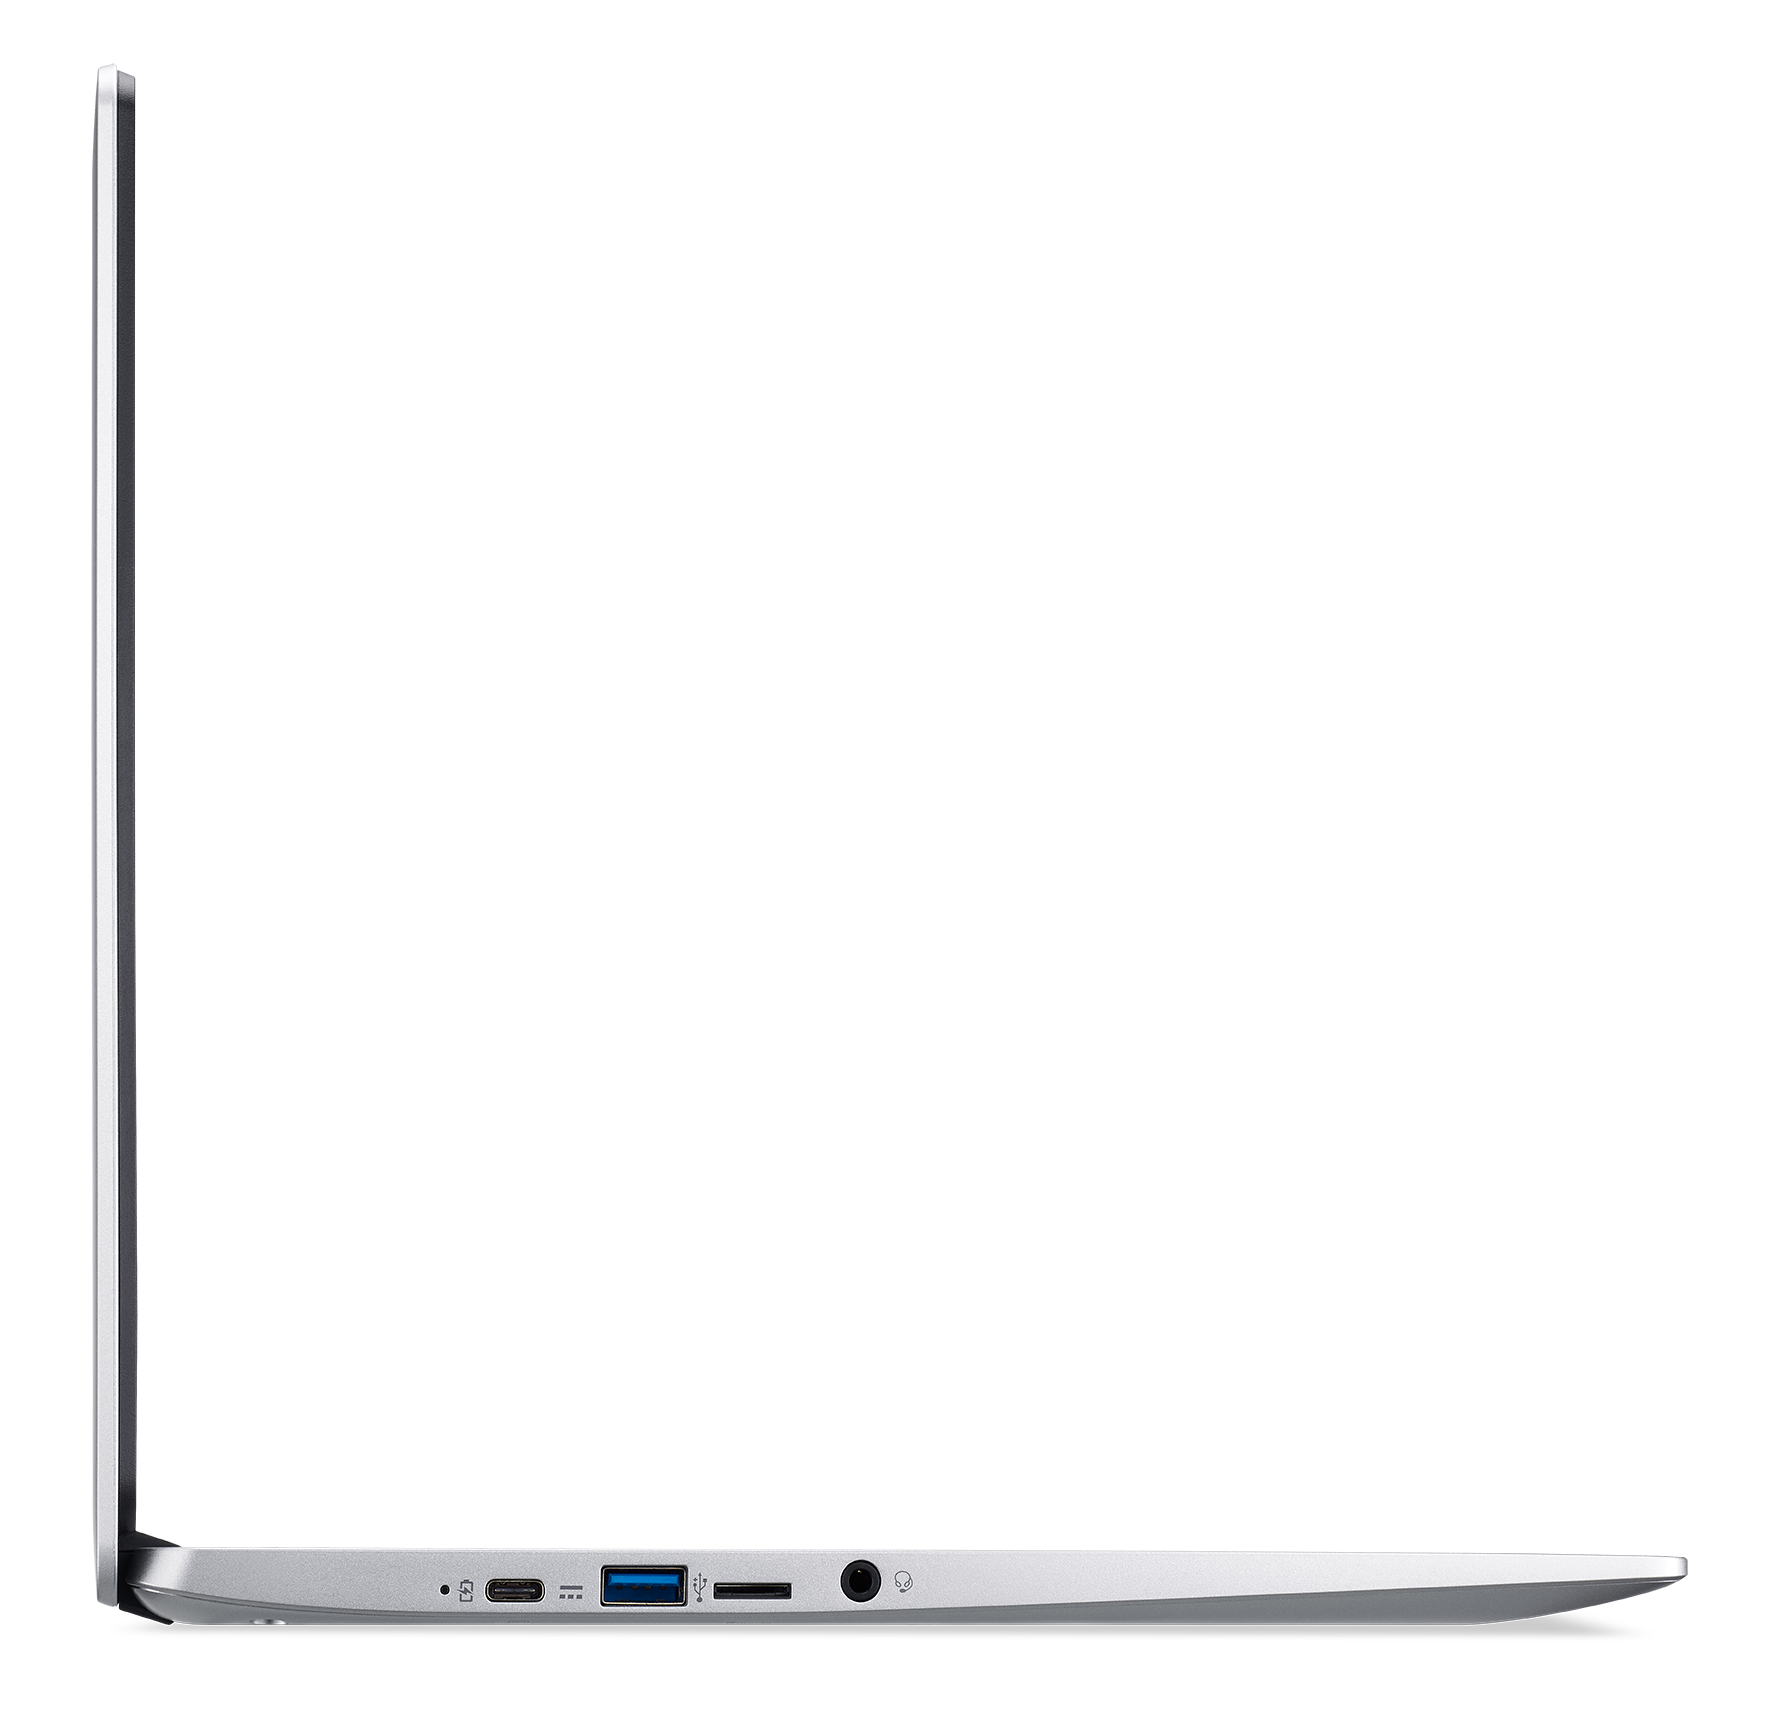 Acer Chromebook 315, 15.6" Full HD 1080p IPS Touchscreen Display, Intel Celeron N4020, 4GB LPDDR4, 64GB eMMC, CB315-3HT-C6XF (Google Classroom Ready) - image 5 of 8